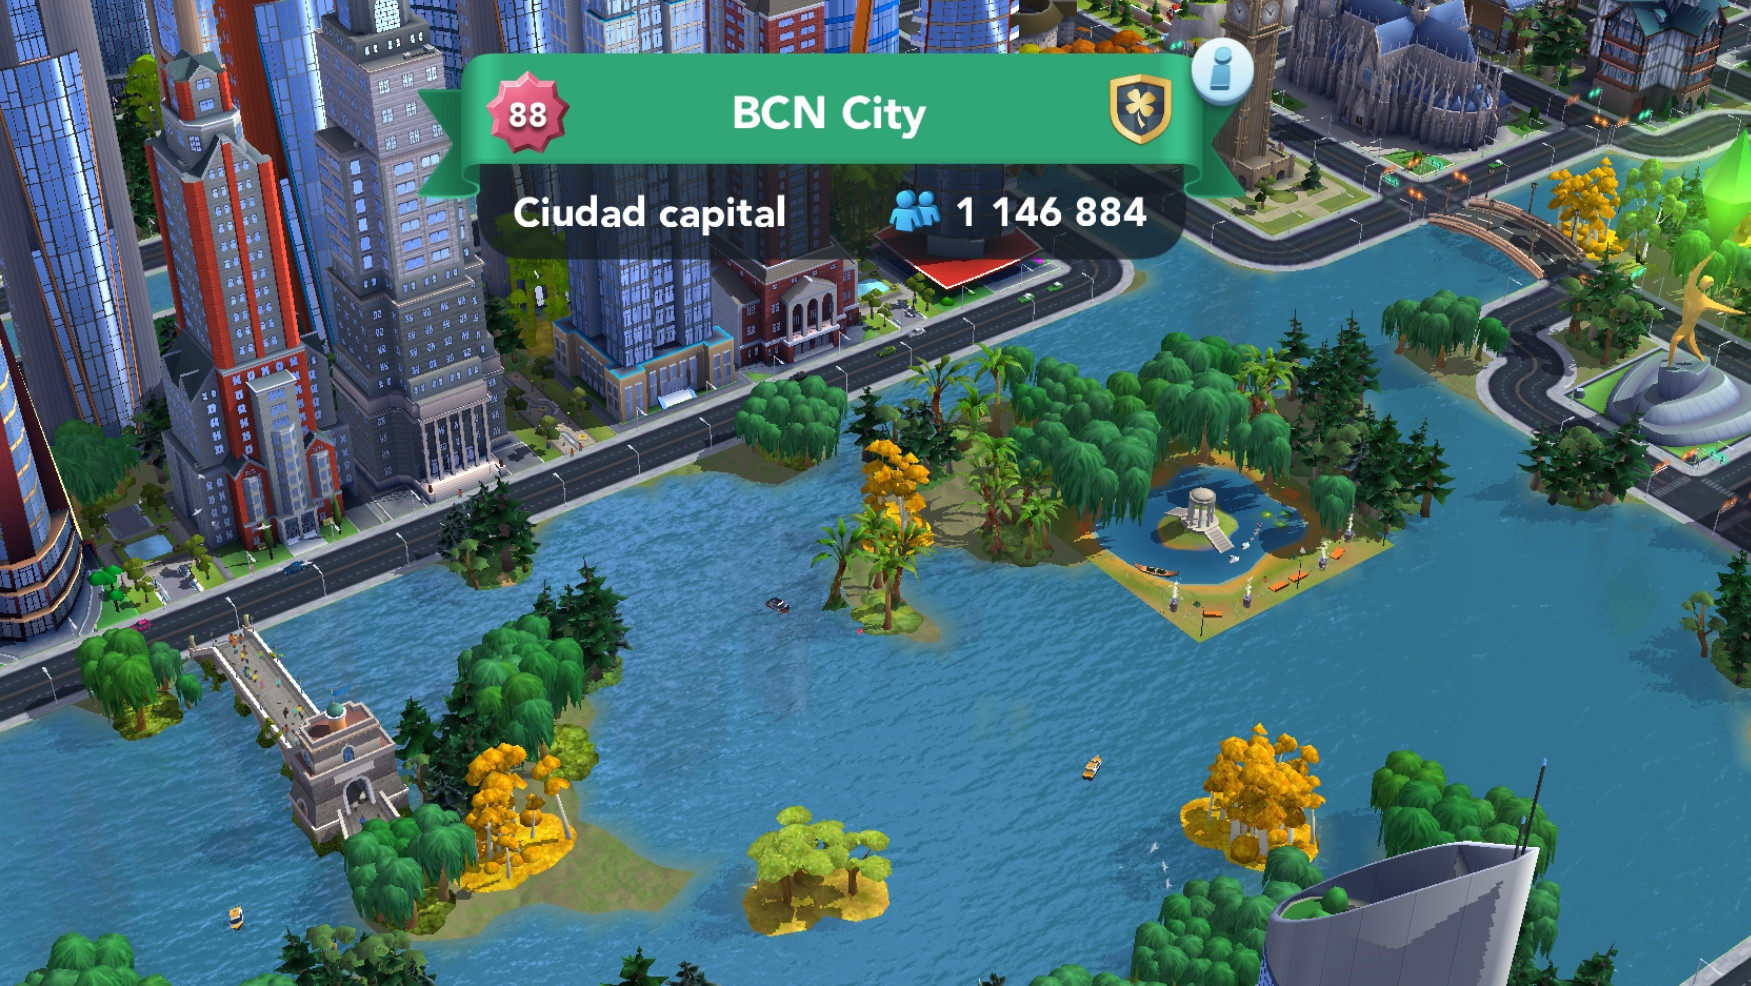 BCN City